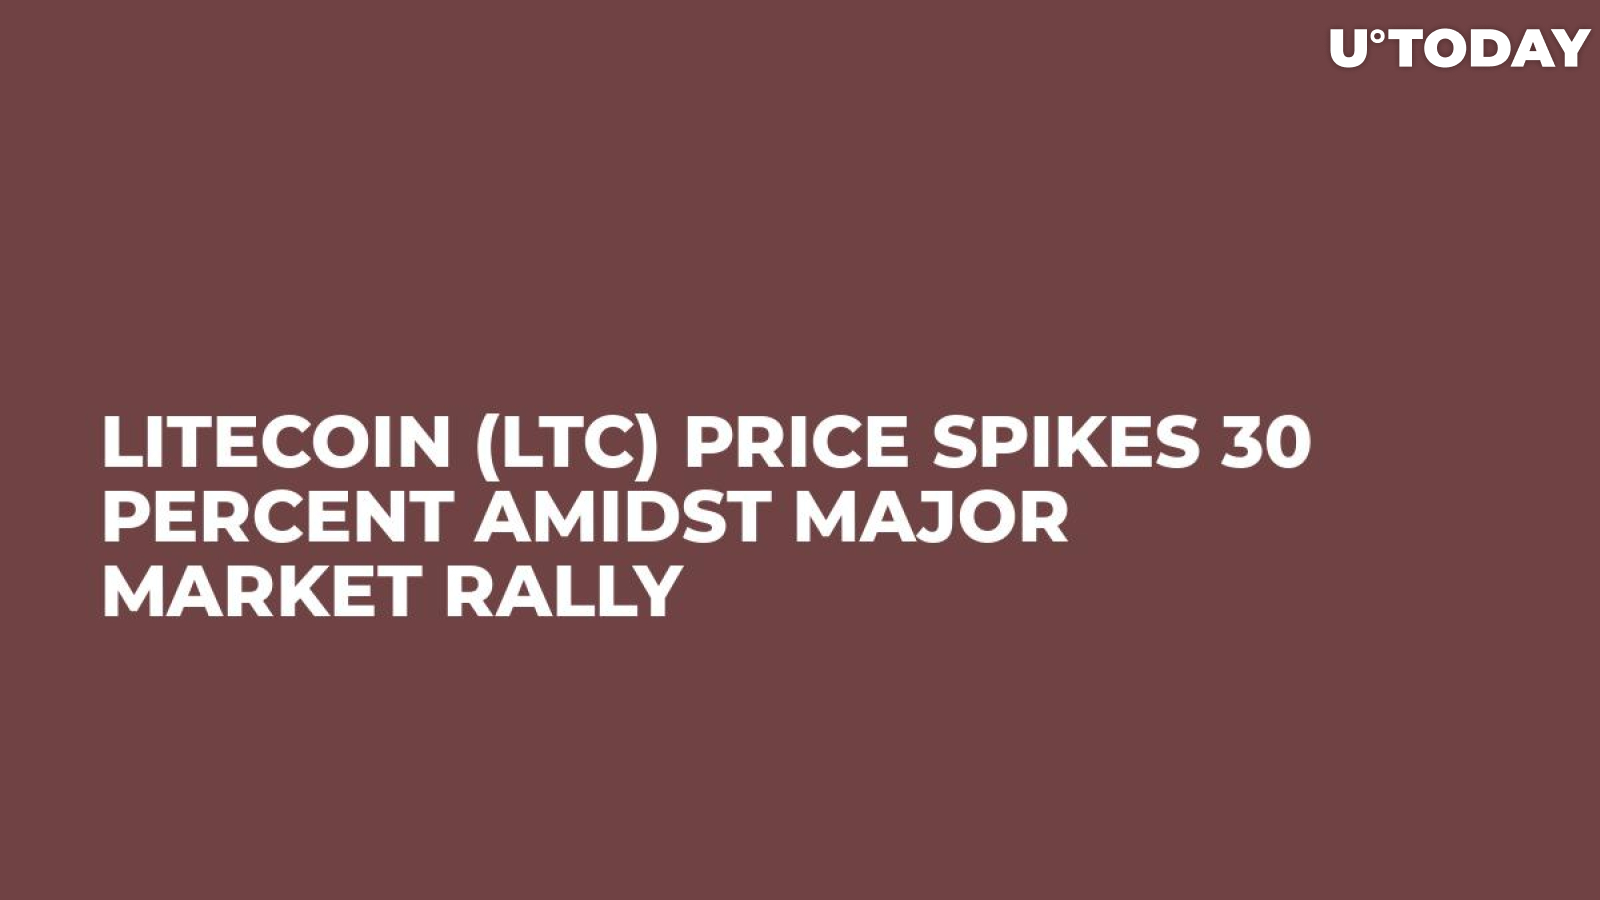 Litecoin (LTC) Price Spikes 30 Percent Amidst Major Market Rally